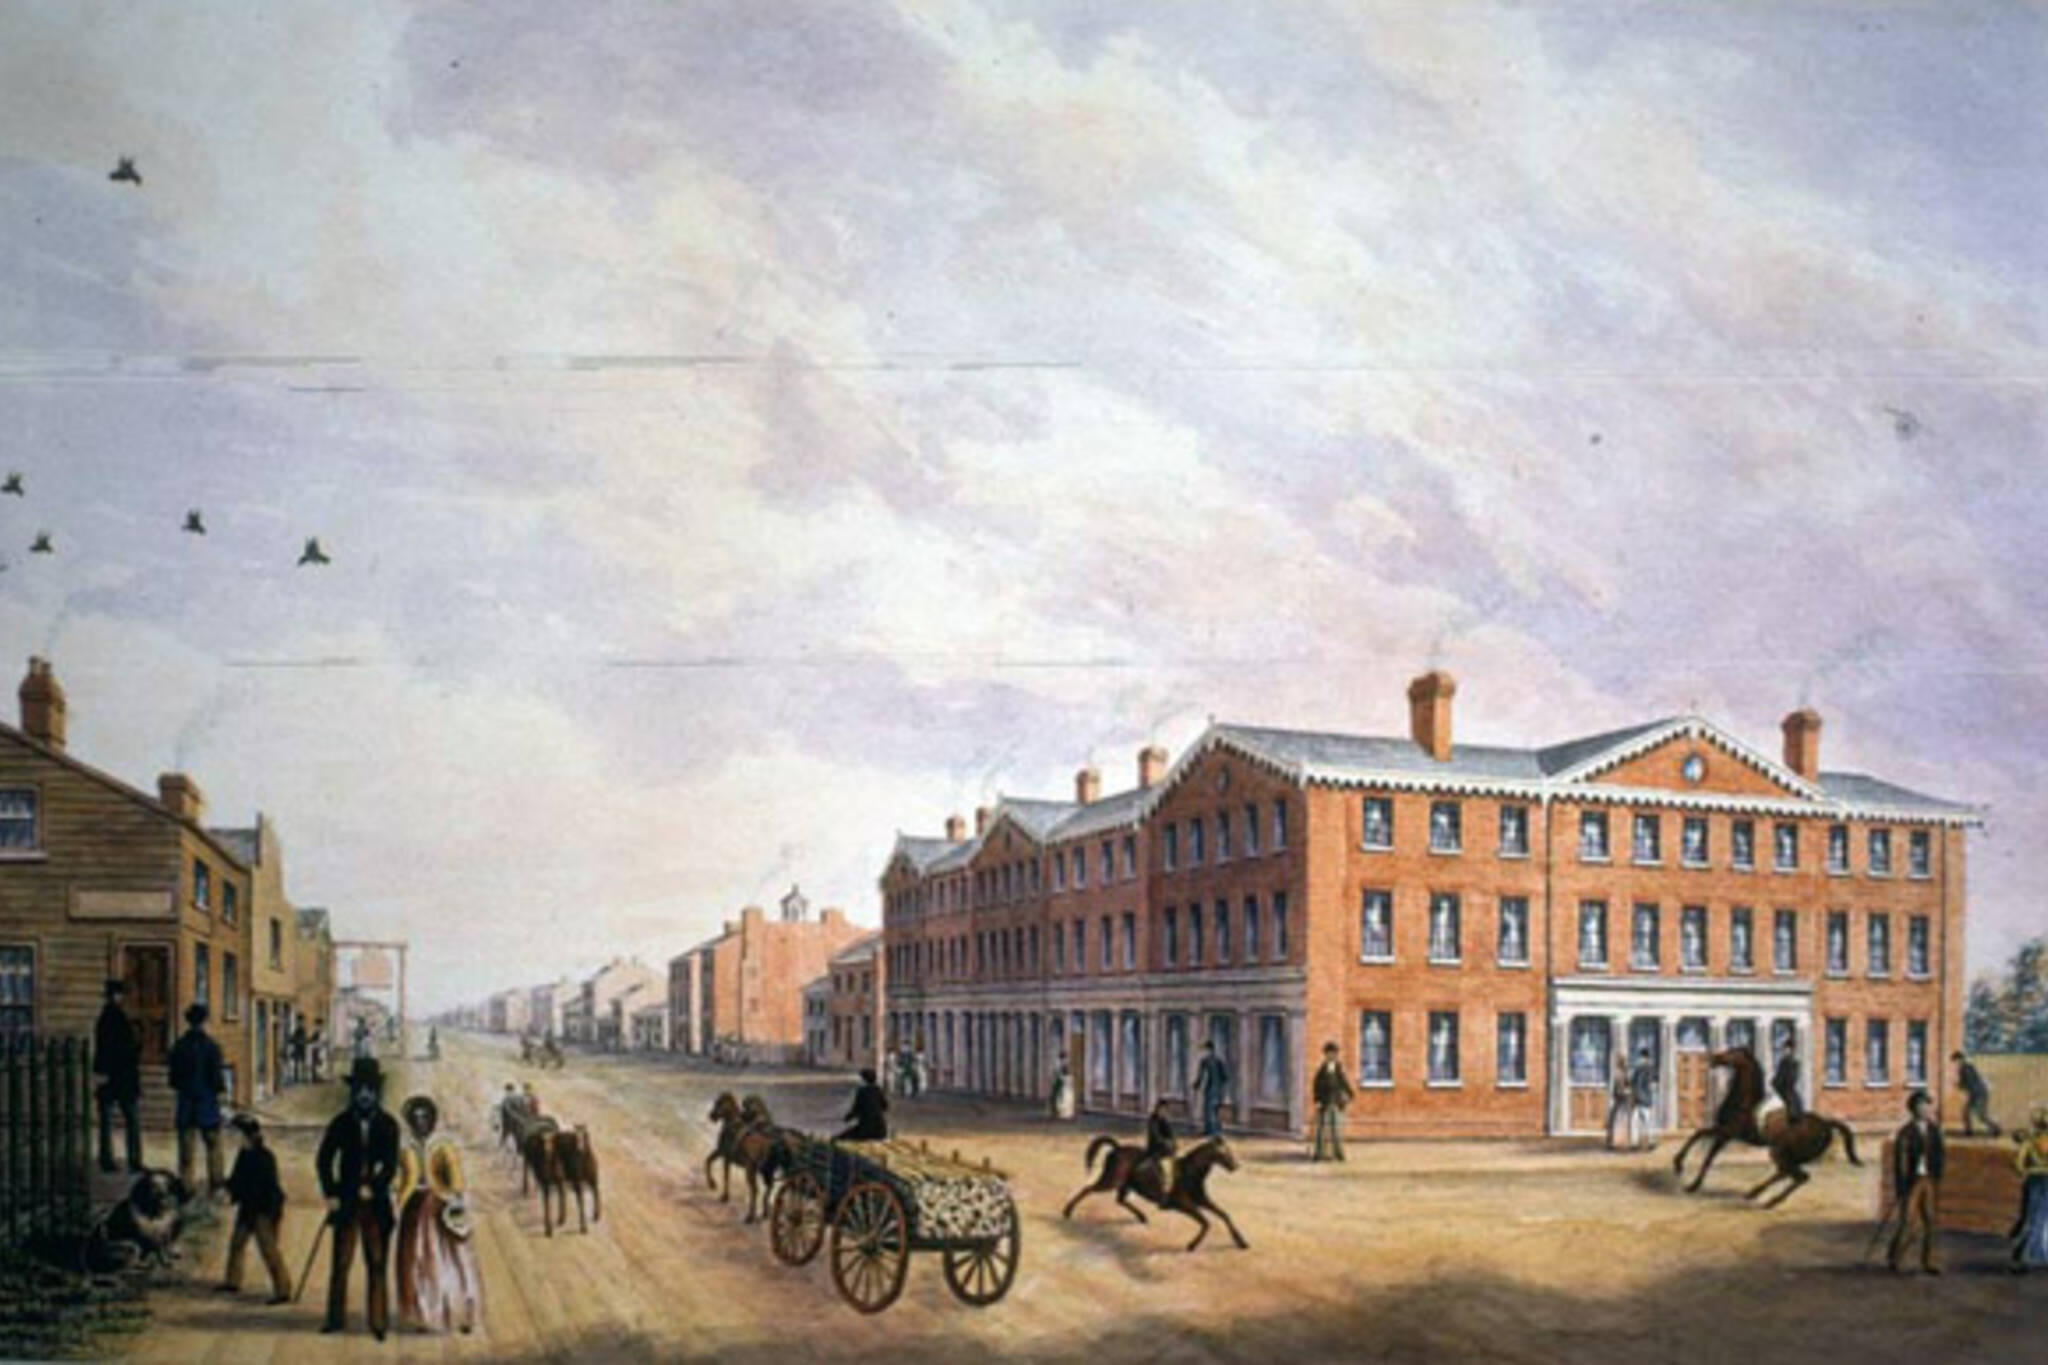 Toronto pre-1850s